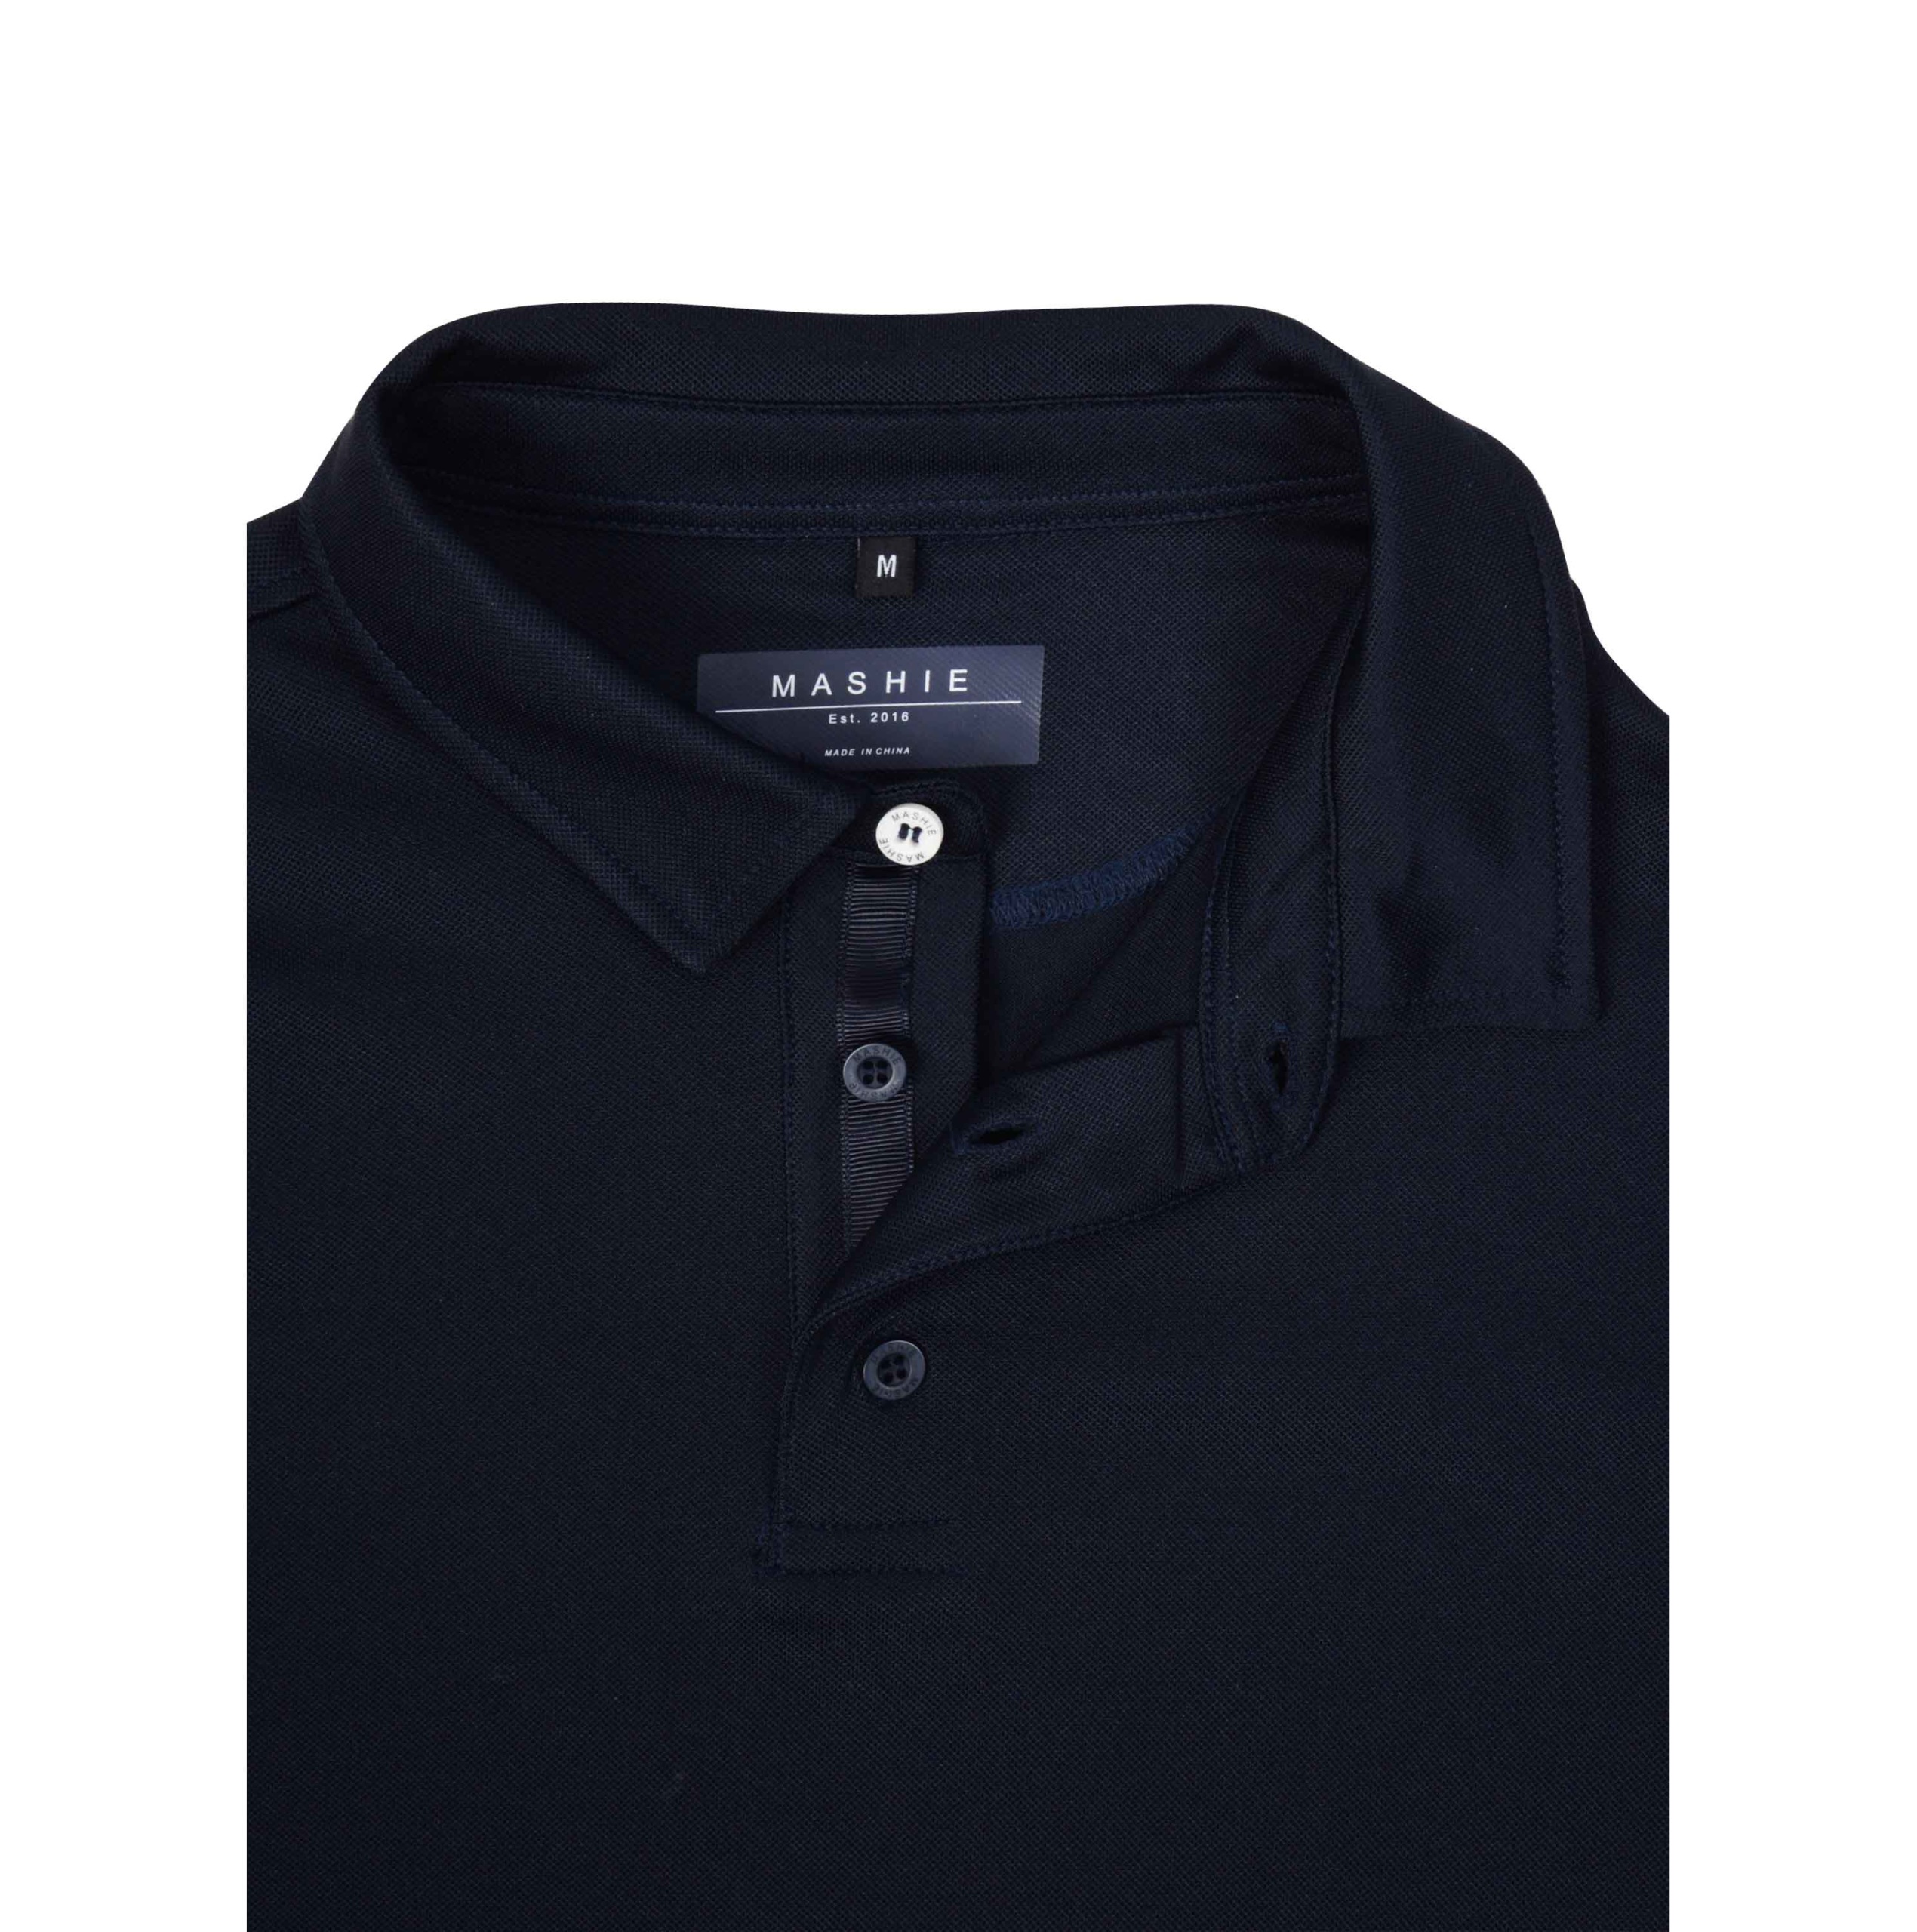 REGS 'Jedburgh' Polo Shirt | Navy Blue | MASHIE